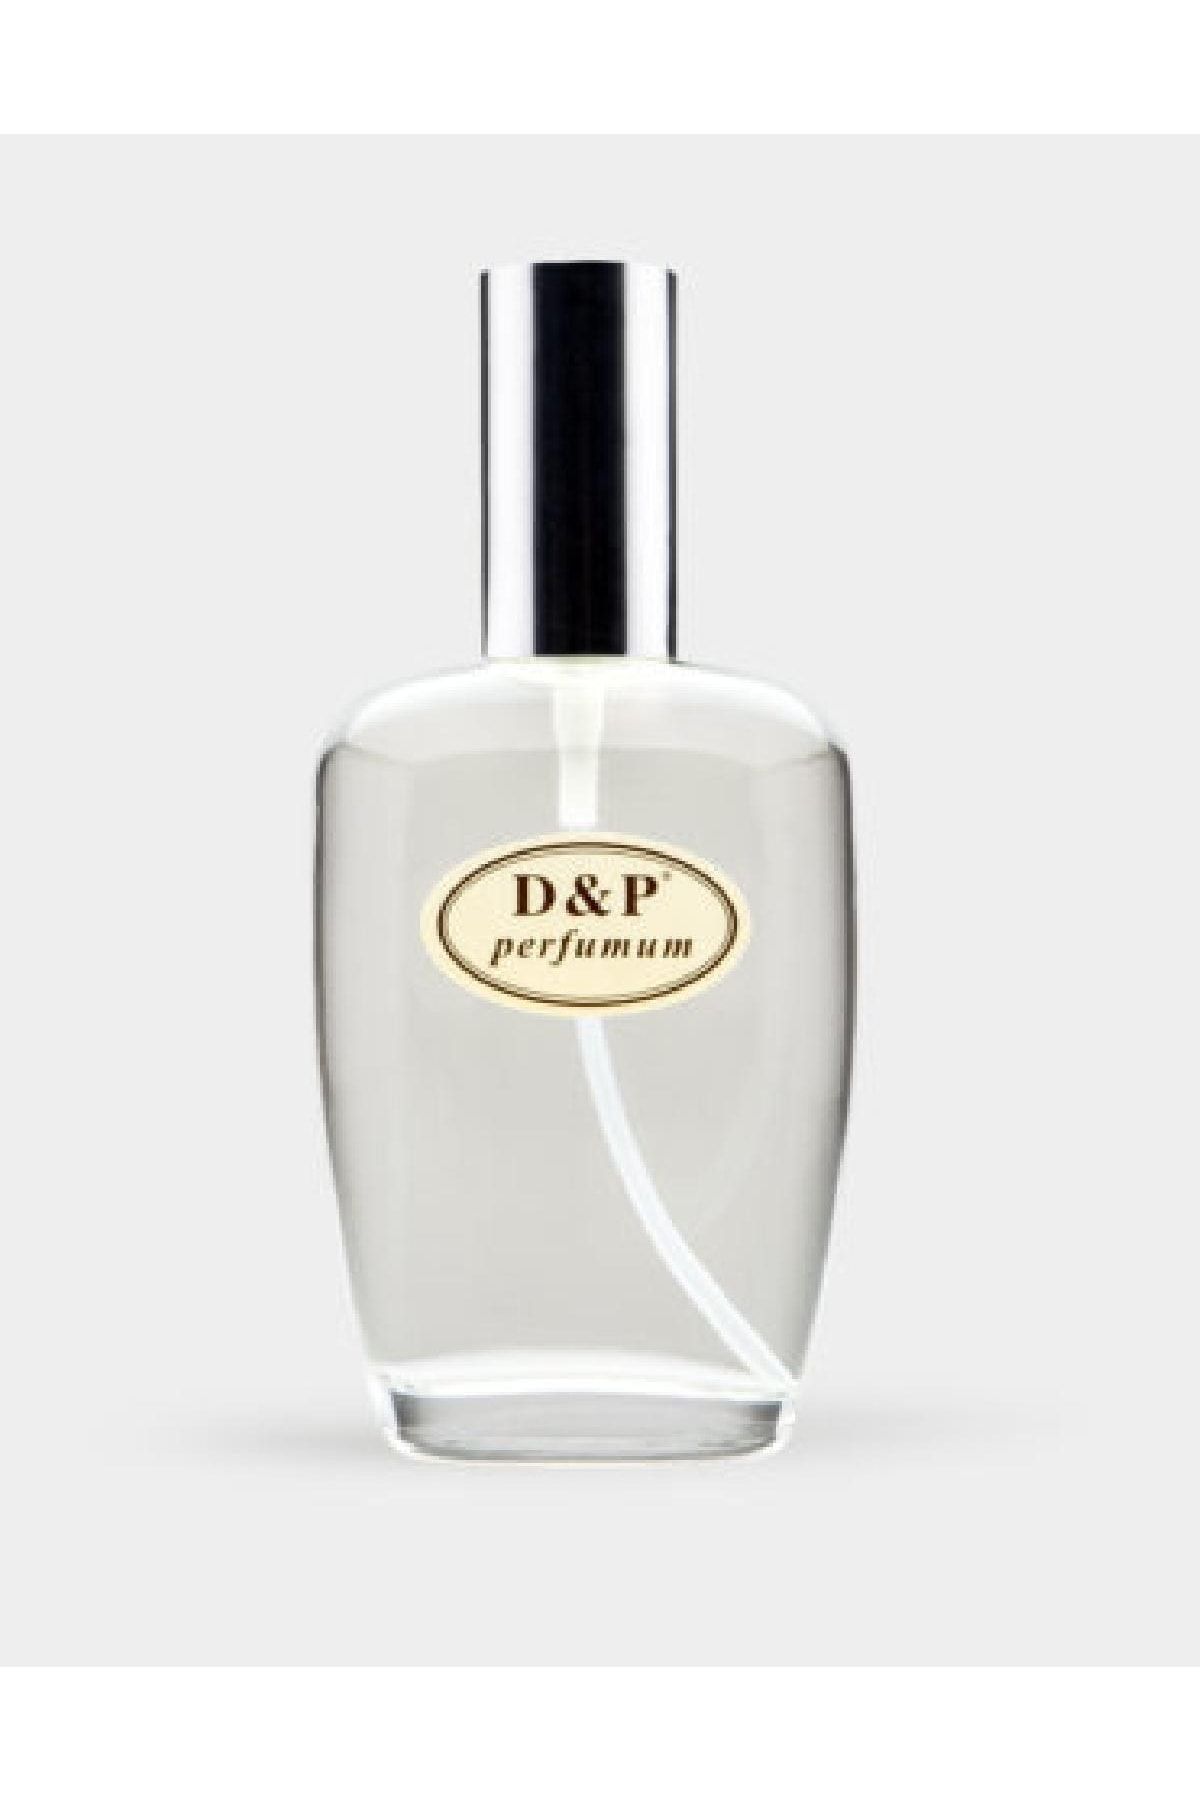 D&P Perfumum G13 Kadın Parfüm EDP 50 ml